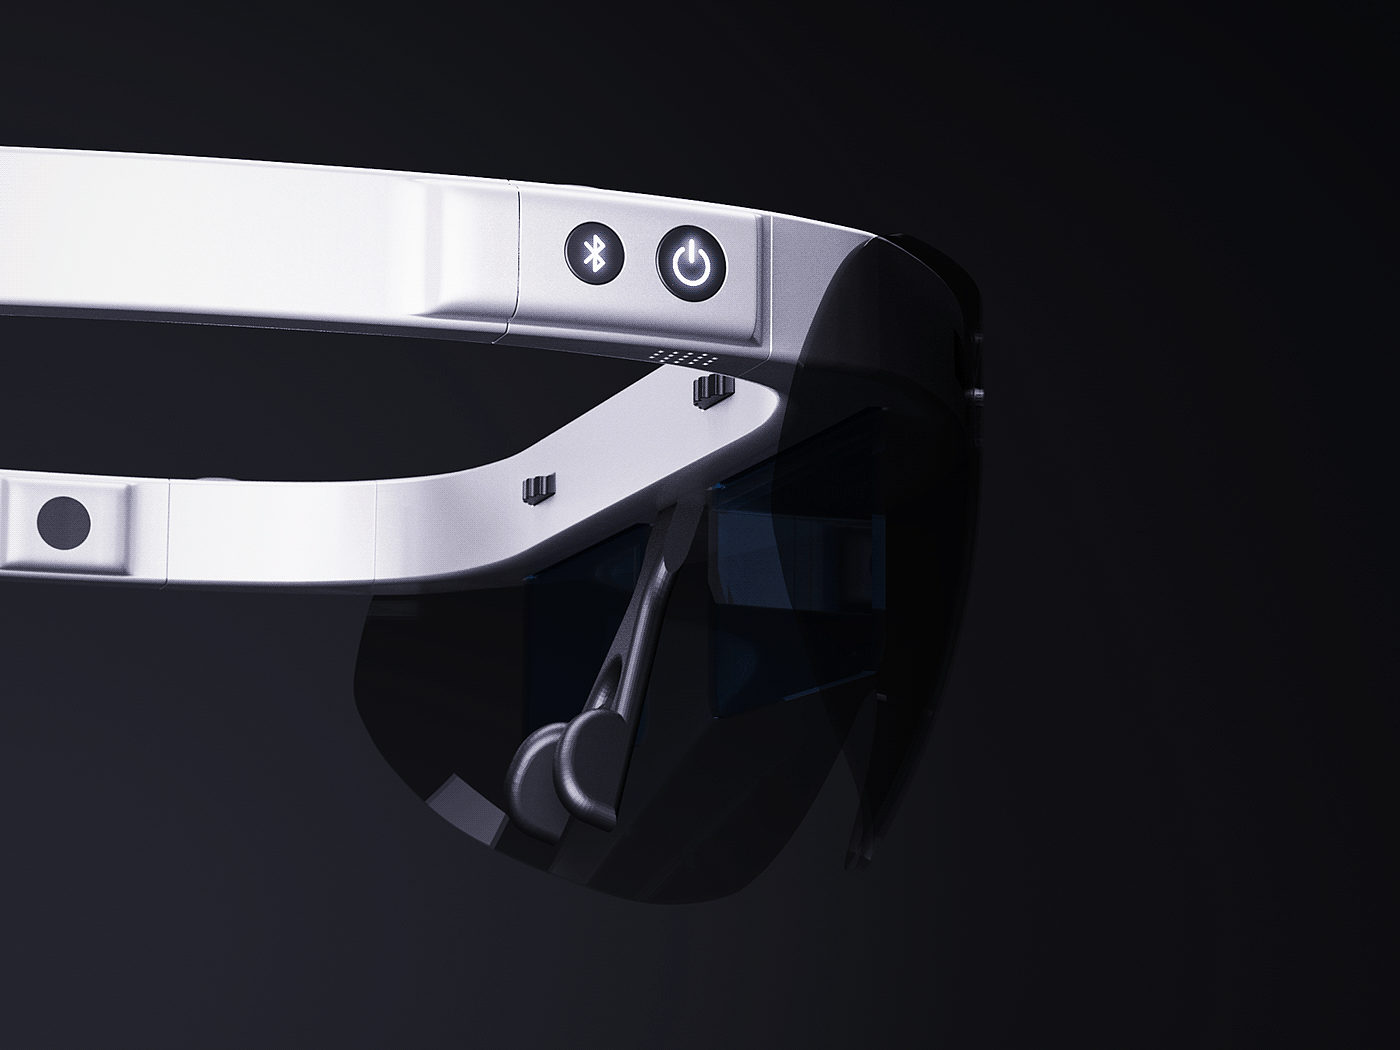 Polaris Extreme，ar眼镜，数码，电子产品，